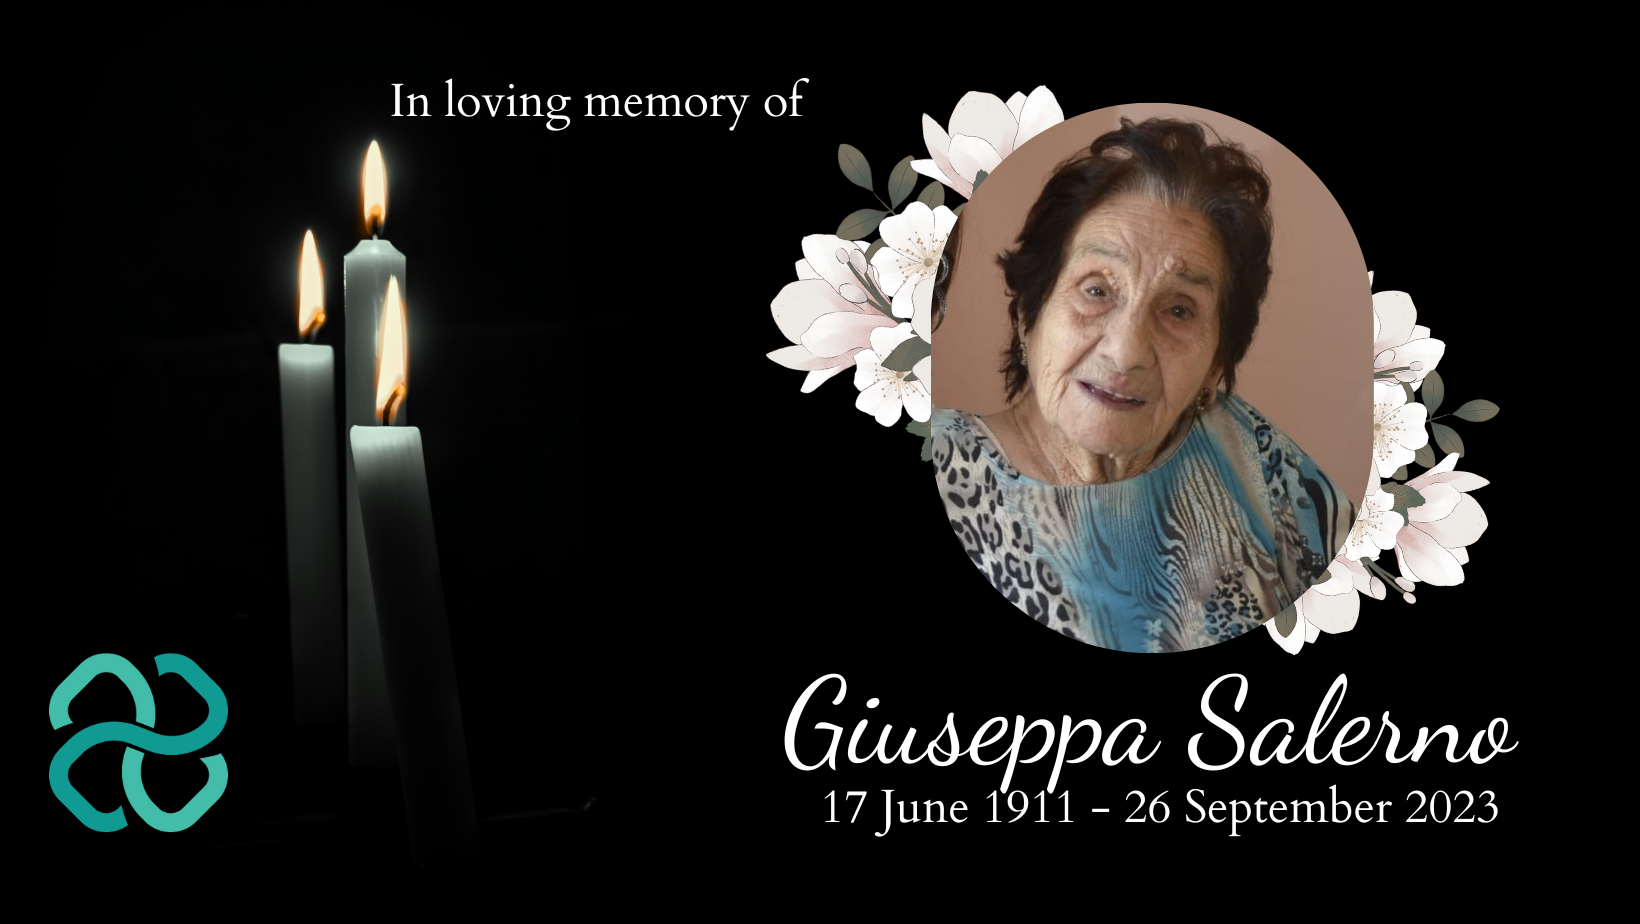 Giuseppa Salerno dies at 112